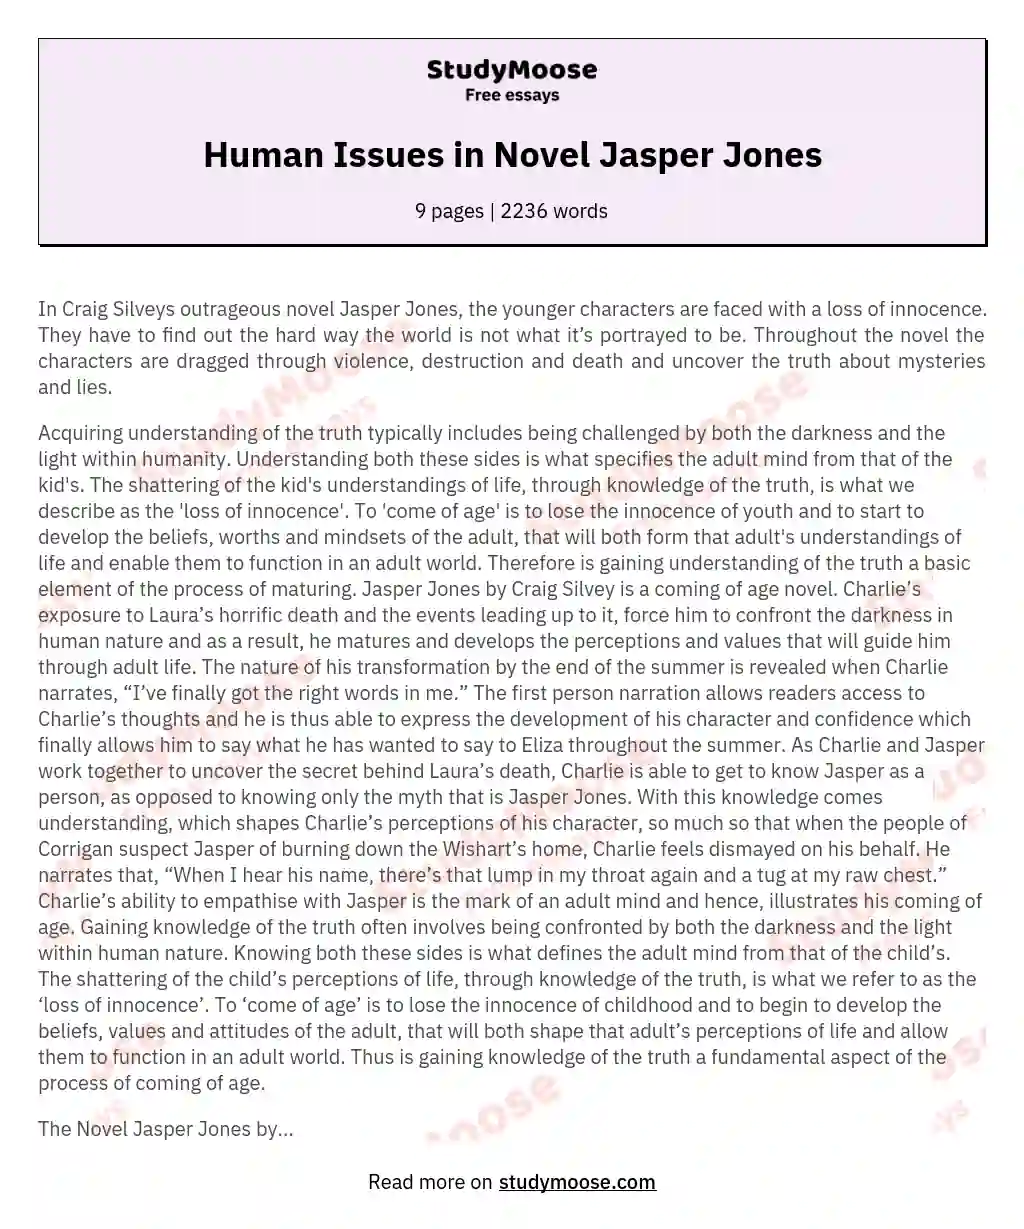 Human Issues in Novel Jasper Jones